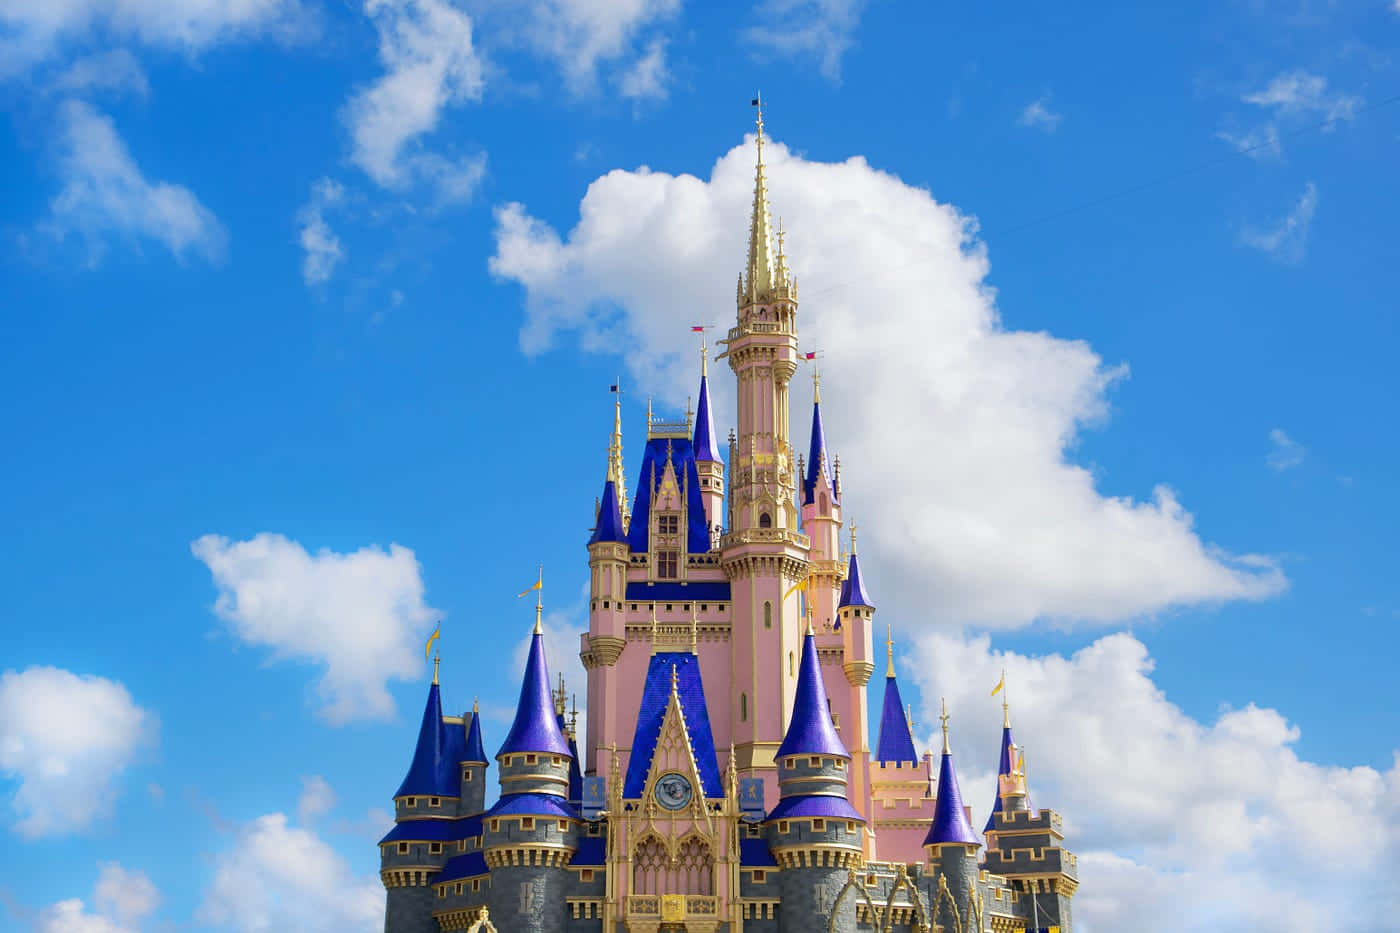 Feel the Magic of Disney Castle.